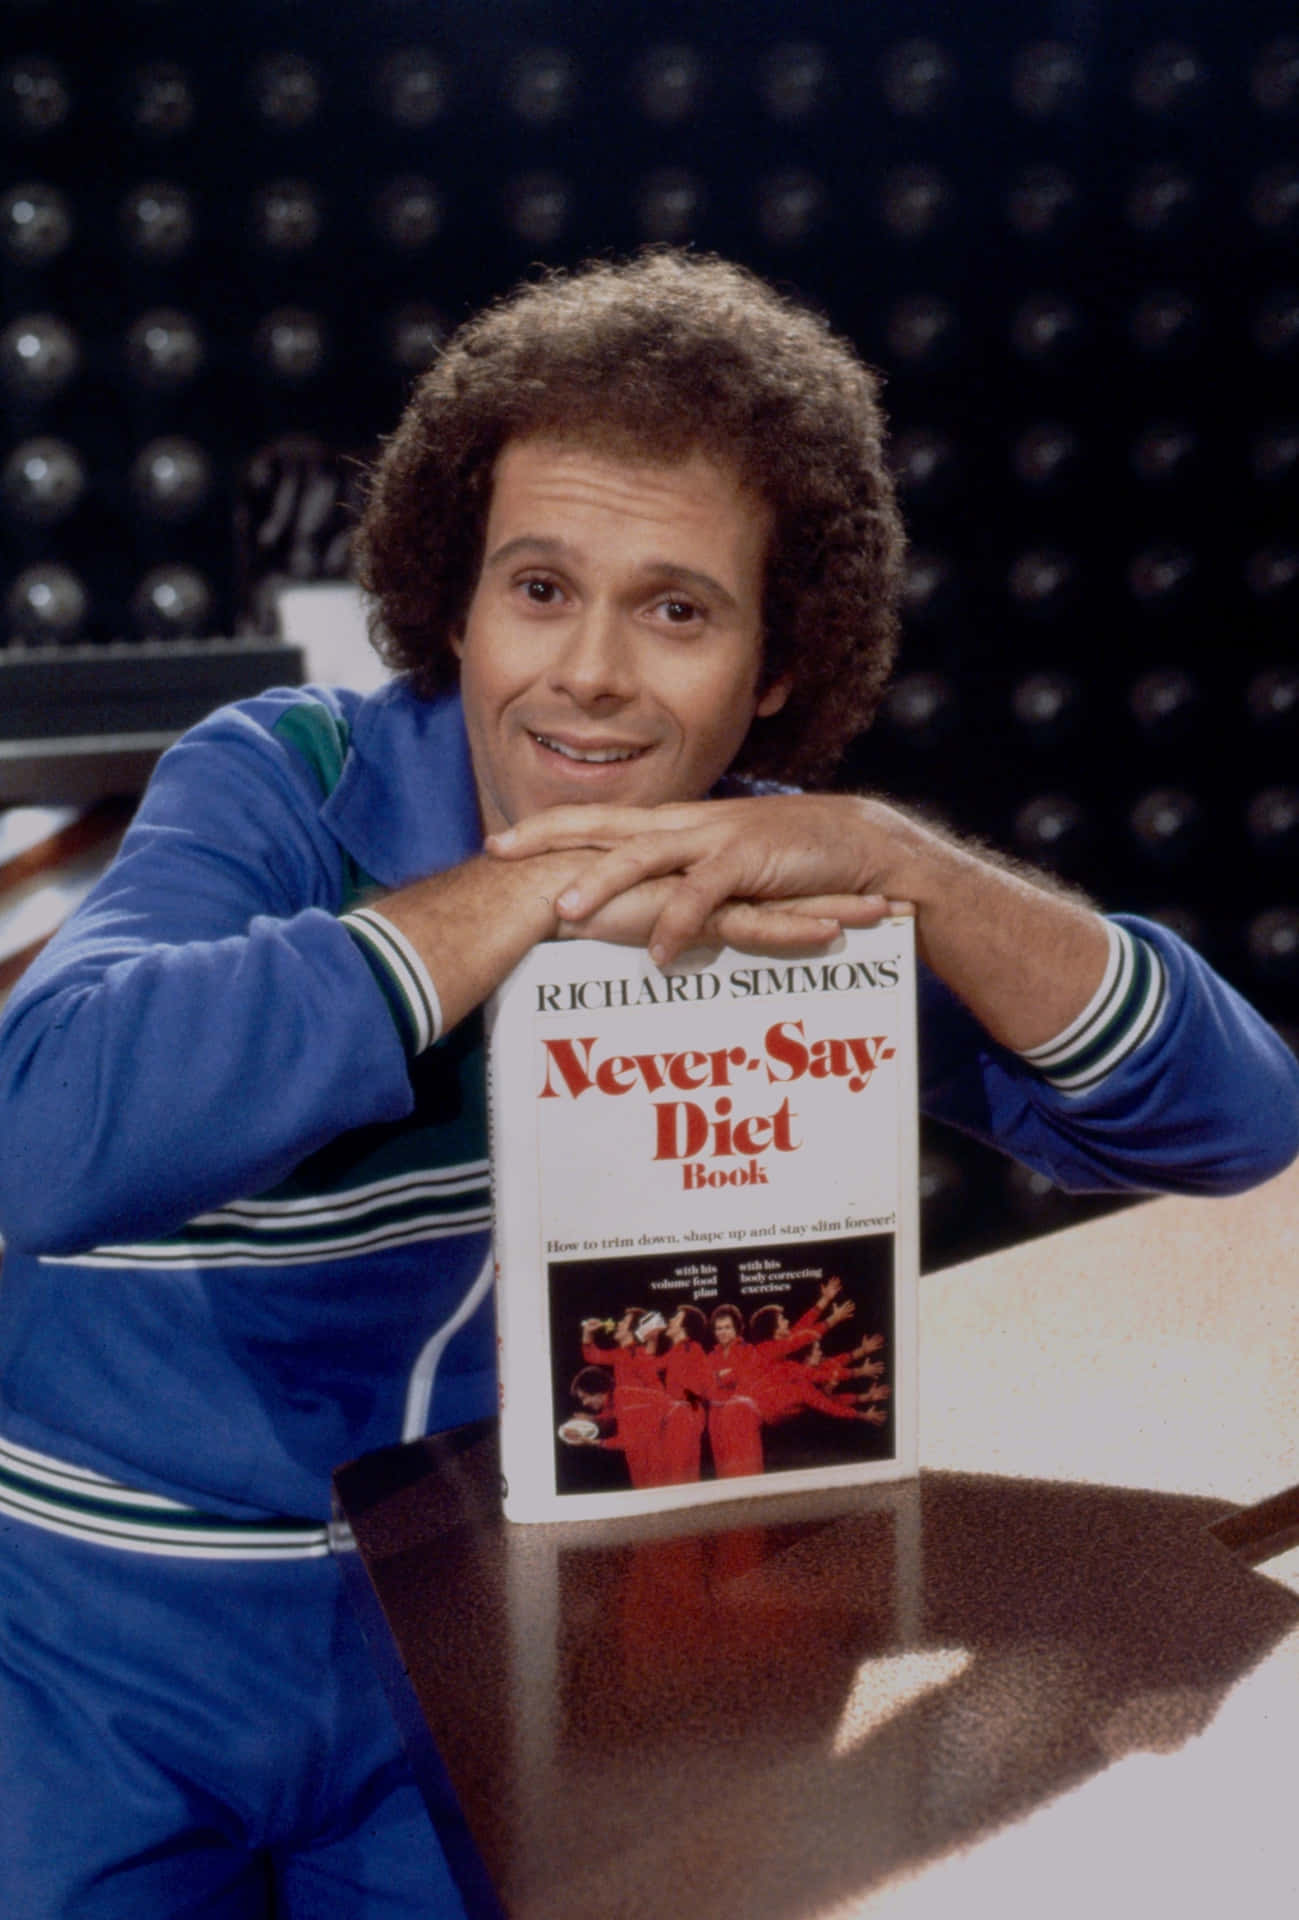 Richard Simmons Never Say Diet Book Promo Wallpaper